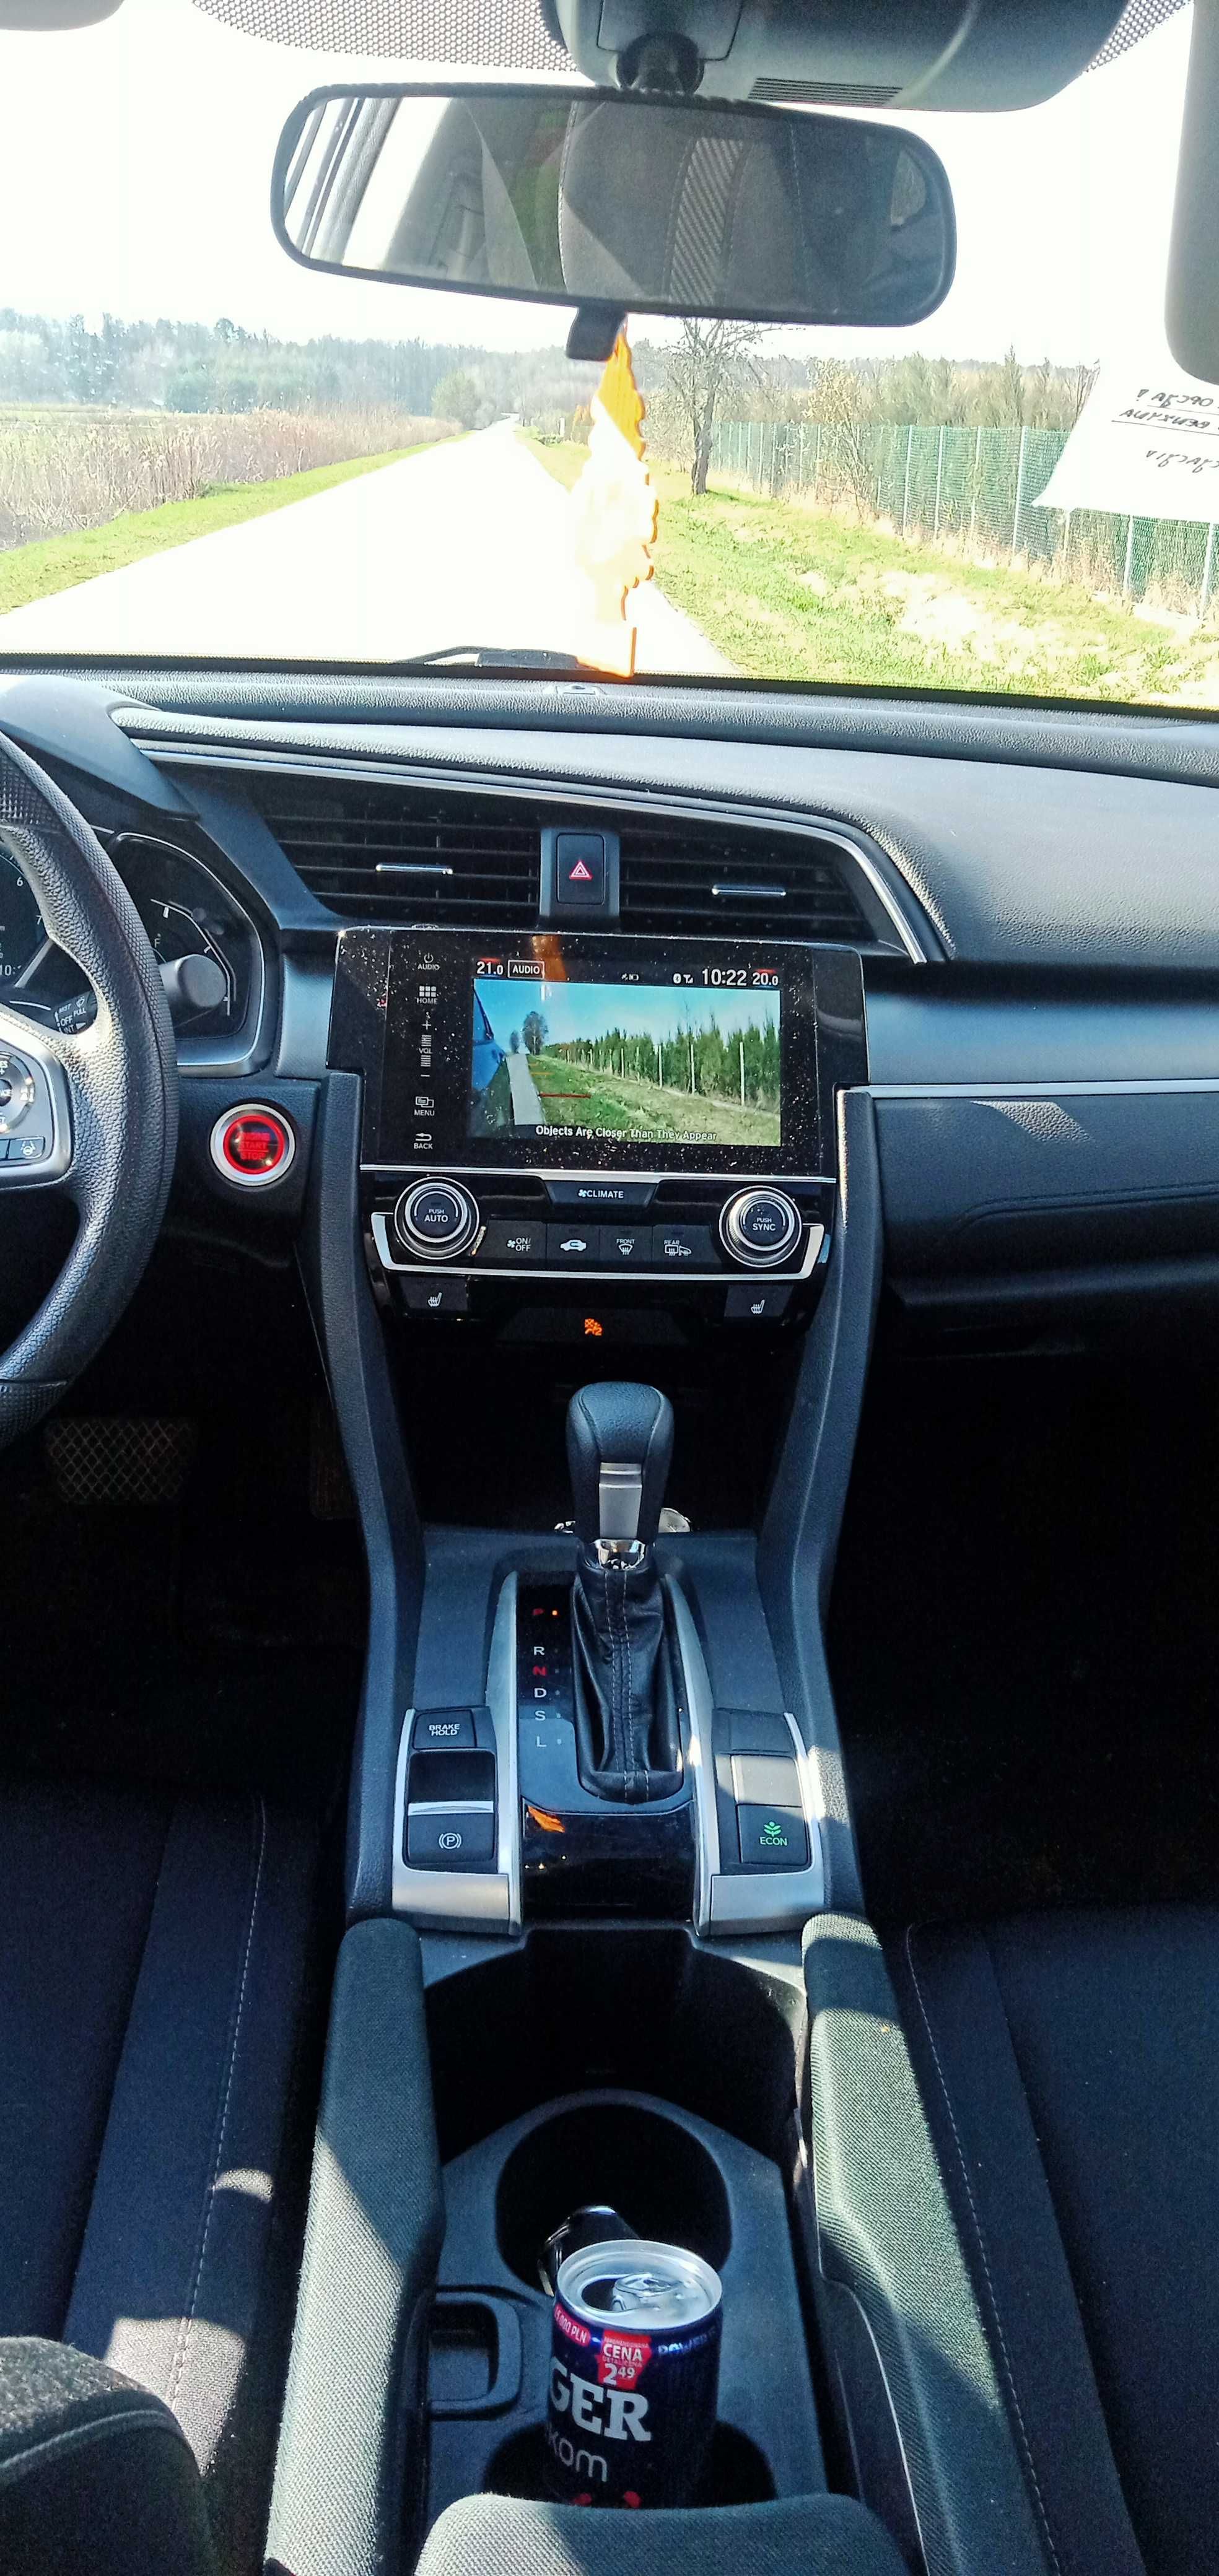 Honda Civic 2.0 V-Tec 2017r  full opcja kamery w lusterkach, cofania